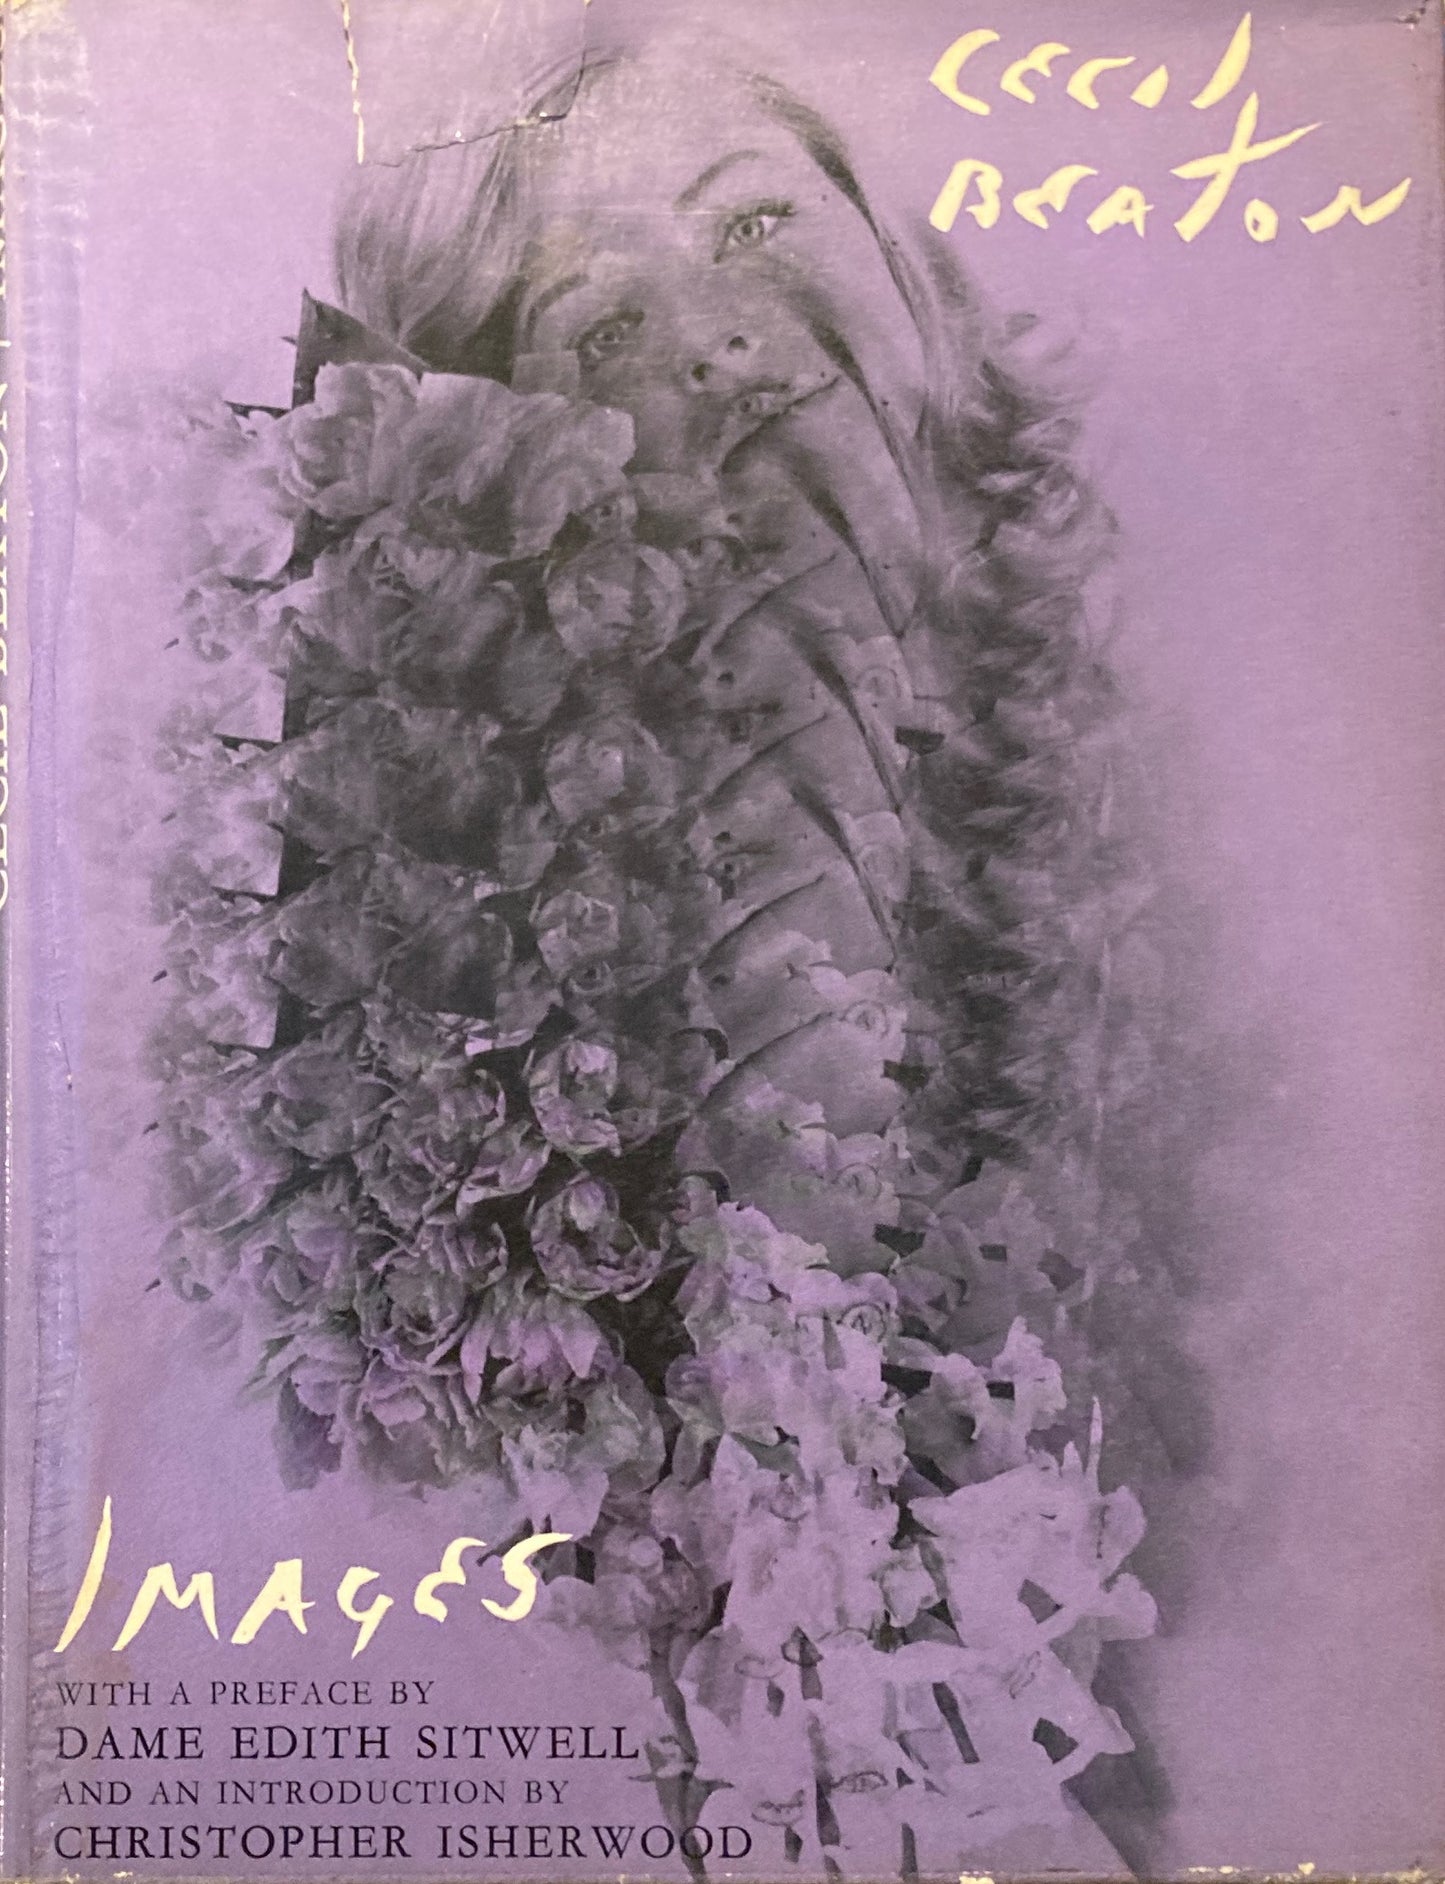 IMAGES　Cecil Beaton　セシル・ビートン写真集